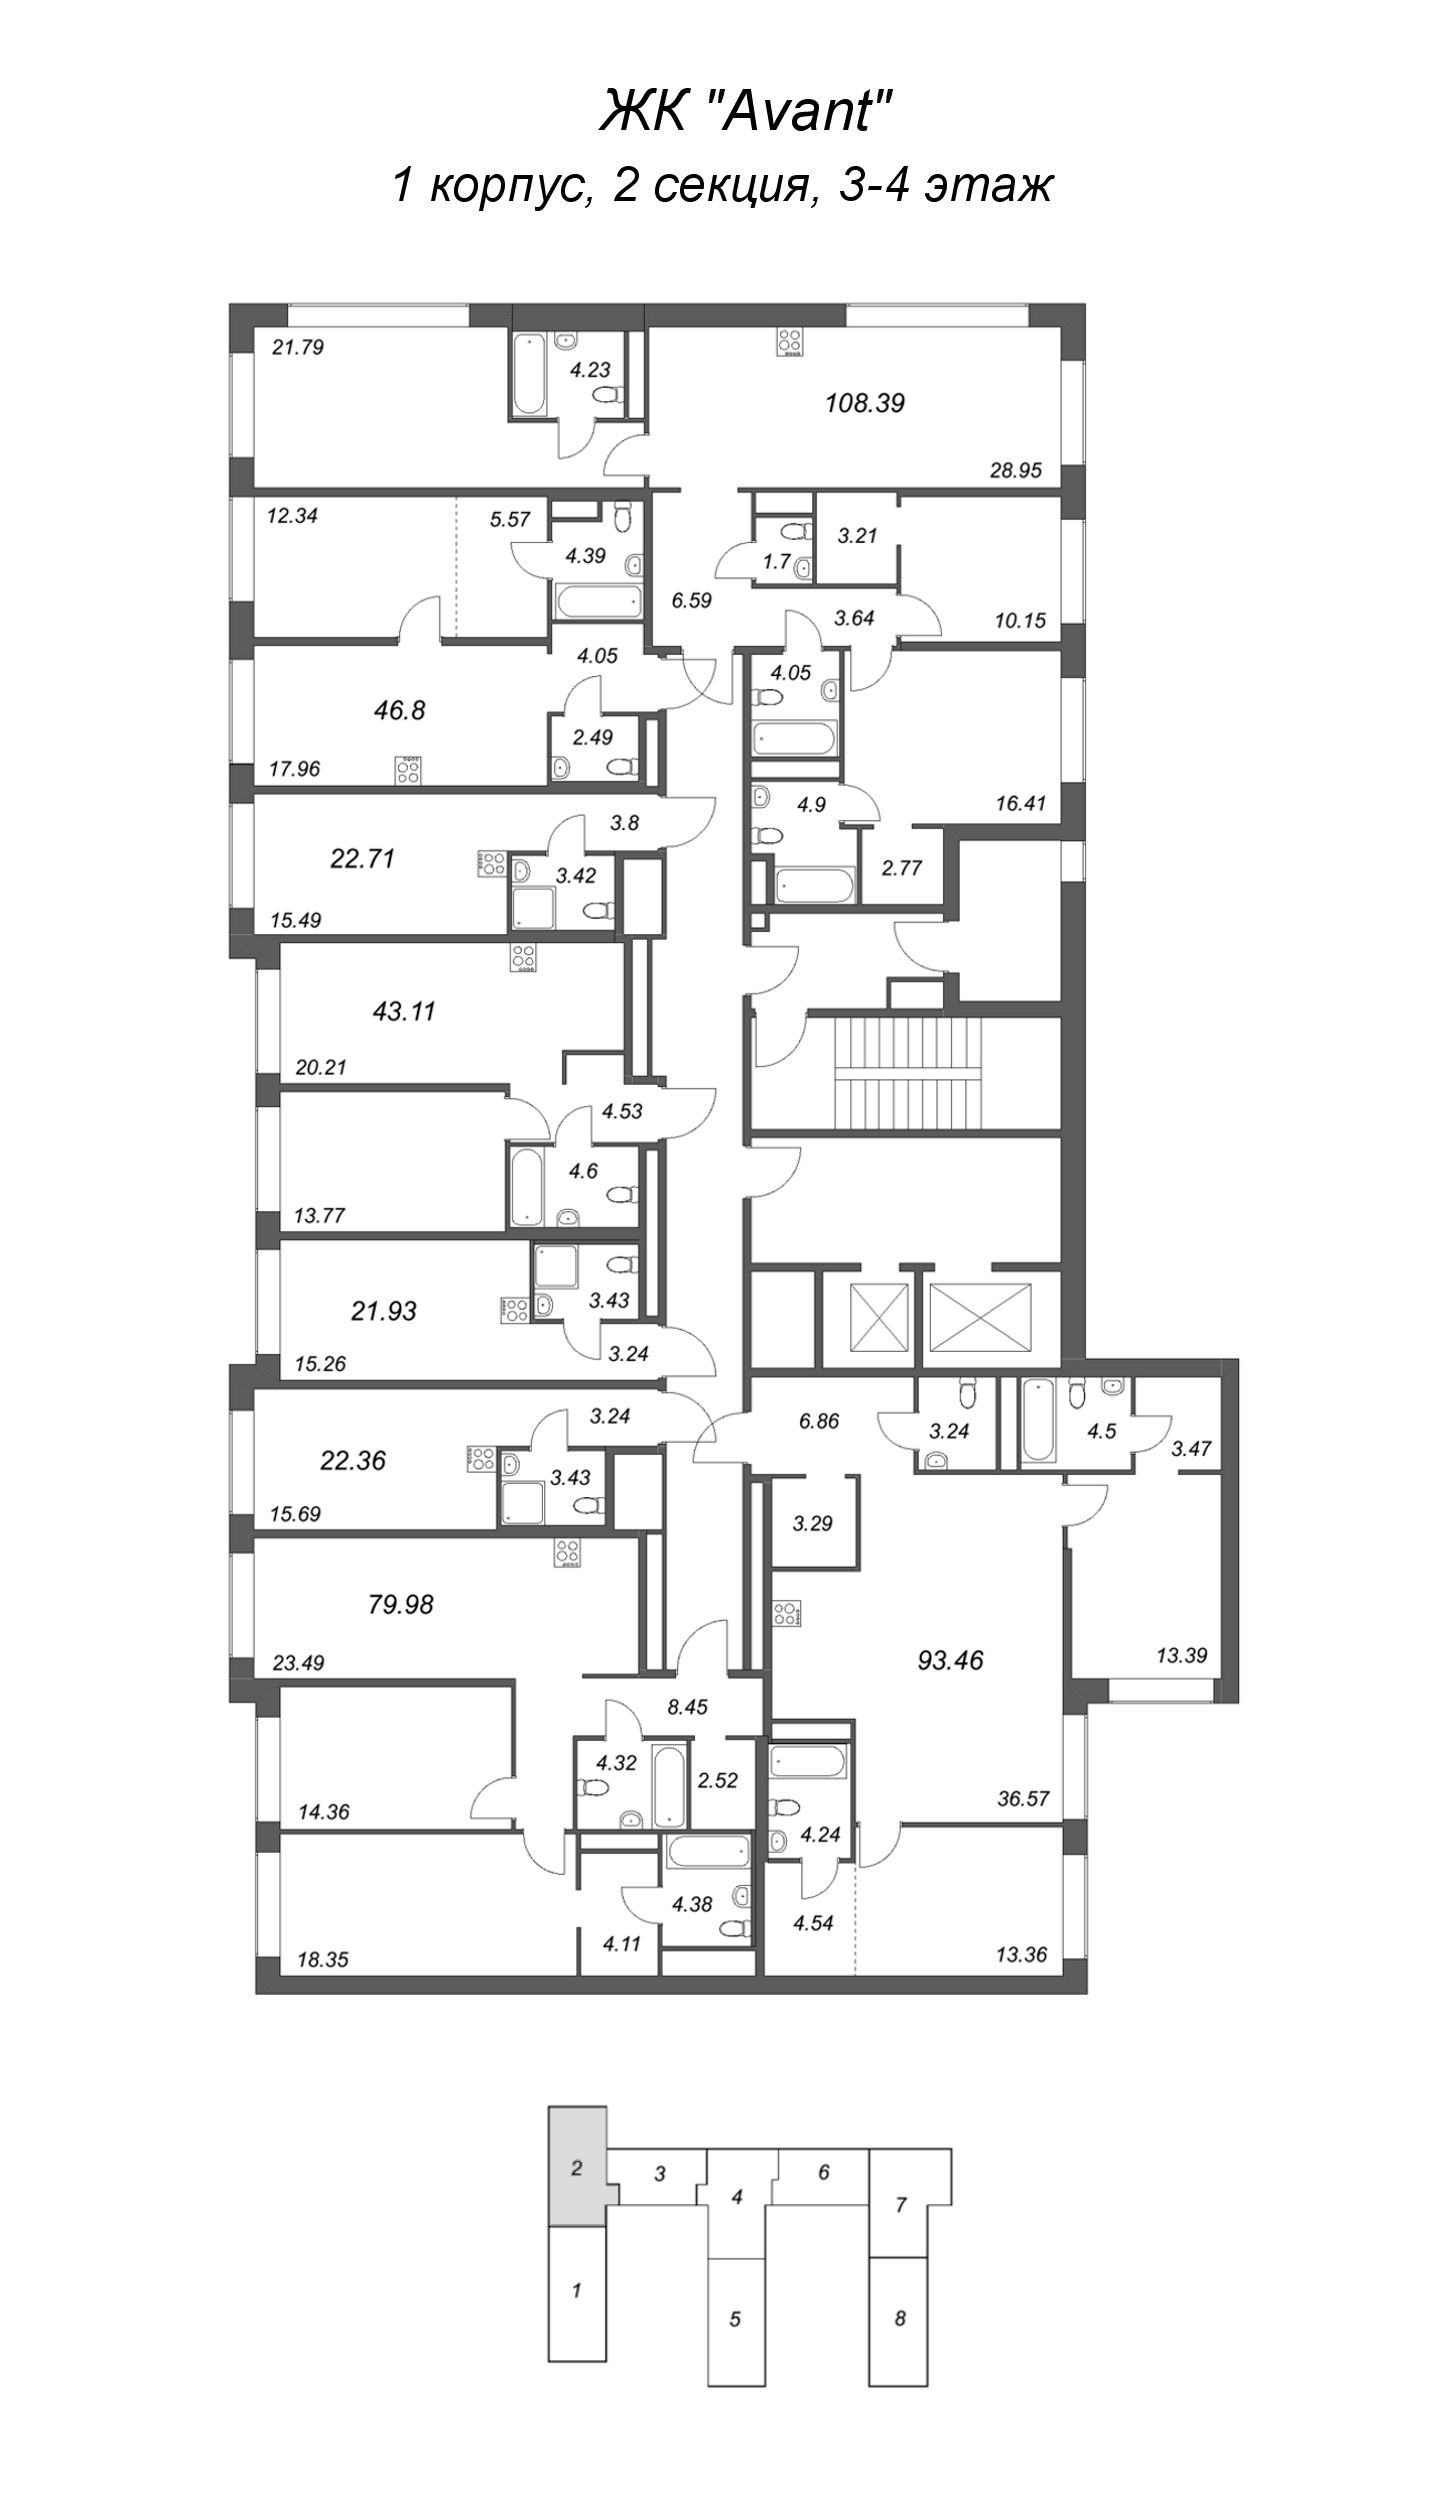 2-комнатная (Евро) квартира, 43.11 м² - планировка этажа